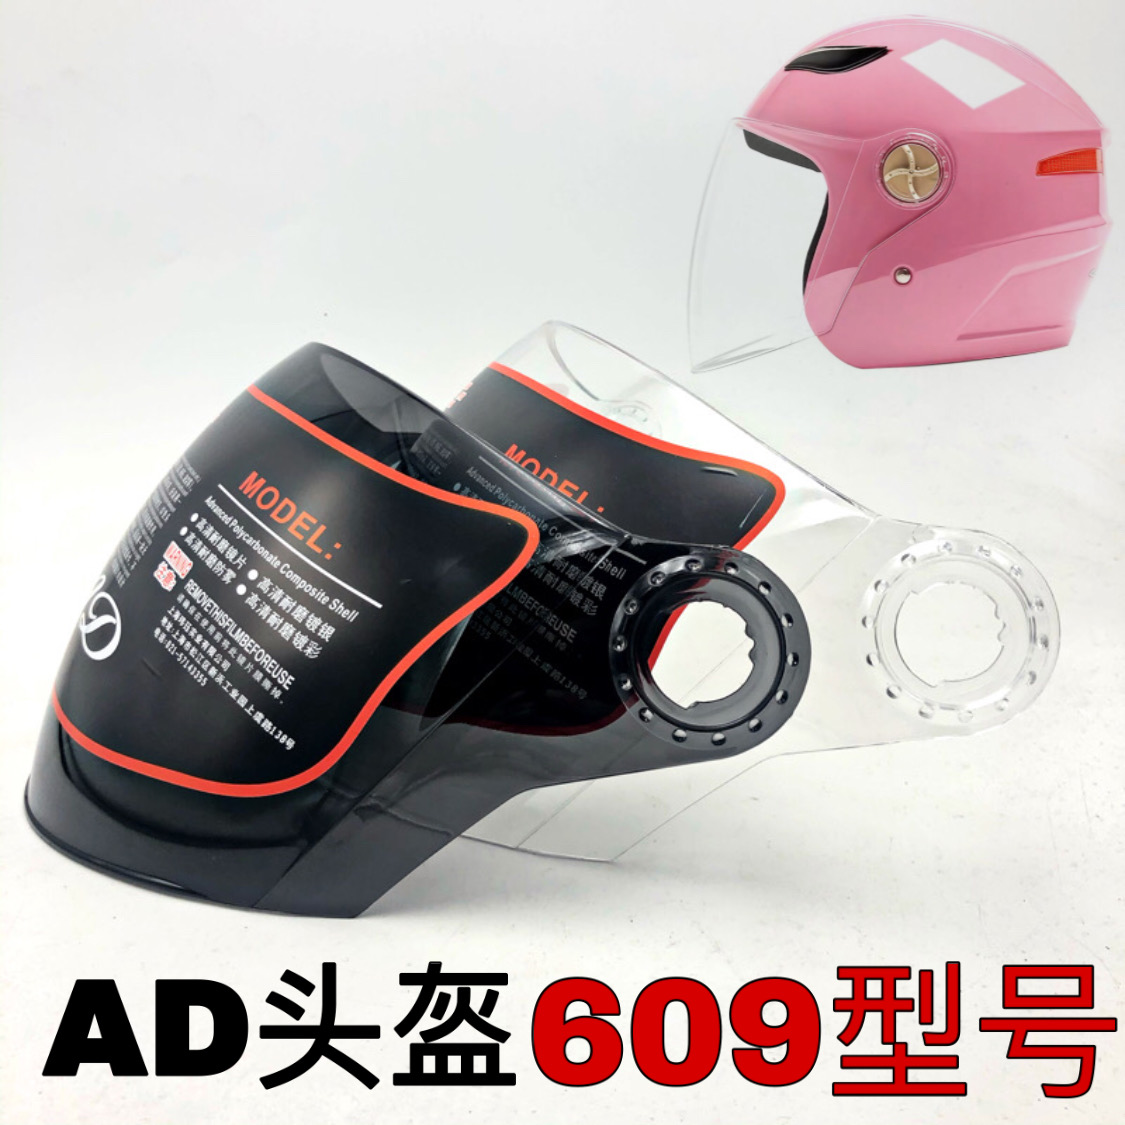 AD609电动摩托车头盔镜片夏季防晒通用透明防雾前挡风玻璃面罩